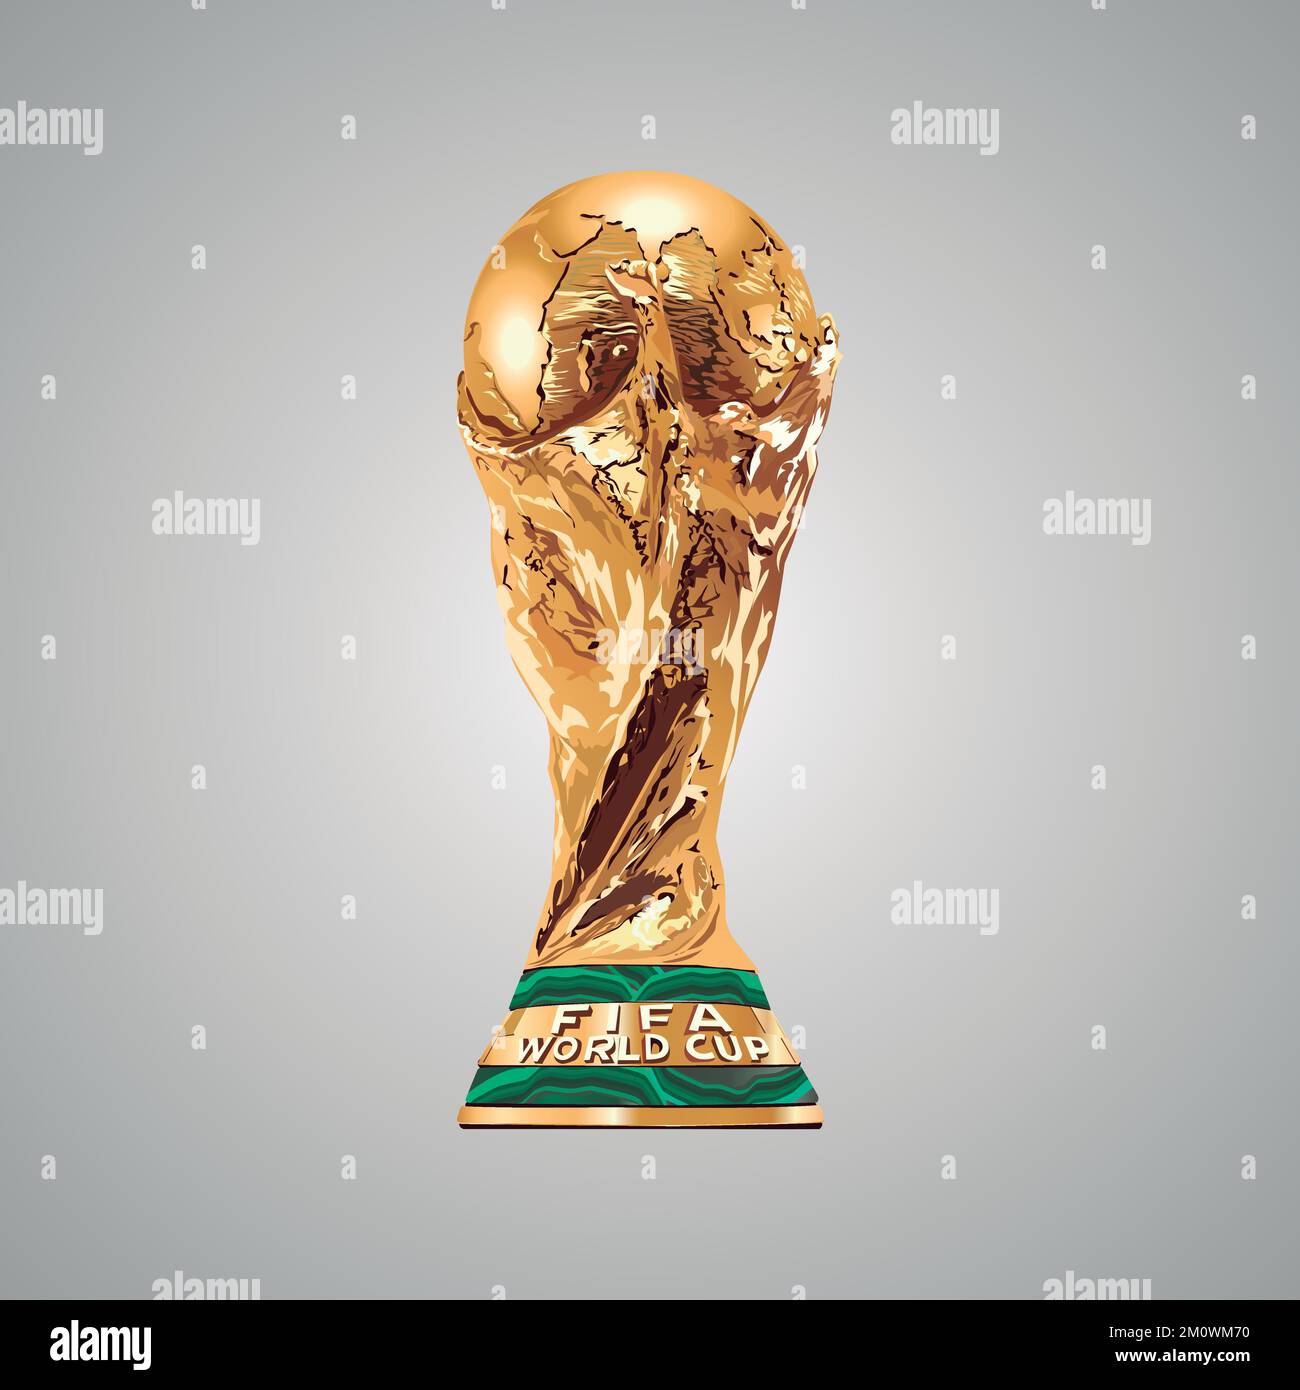 Fifa world cup qatar 2022 official logo gold Vector Image